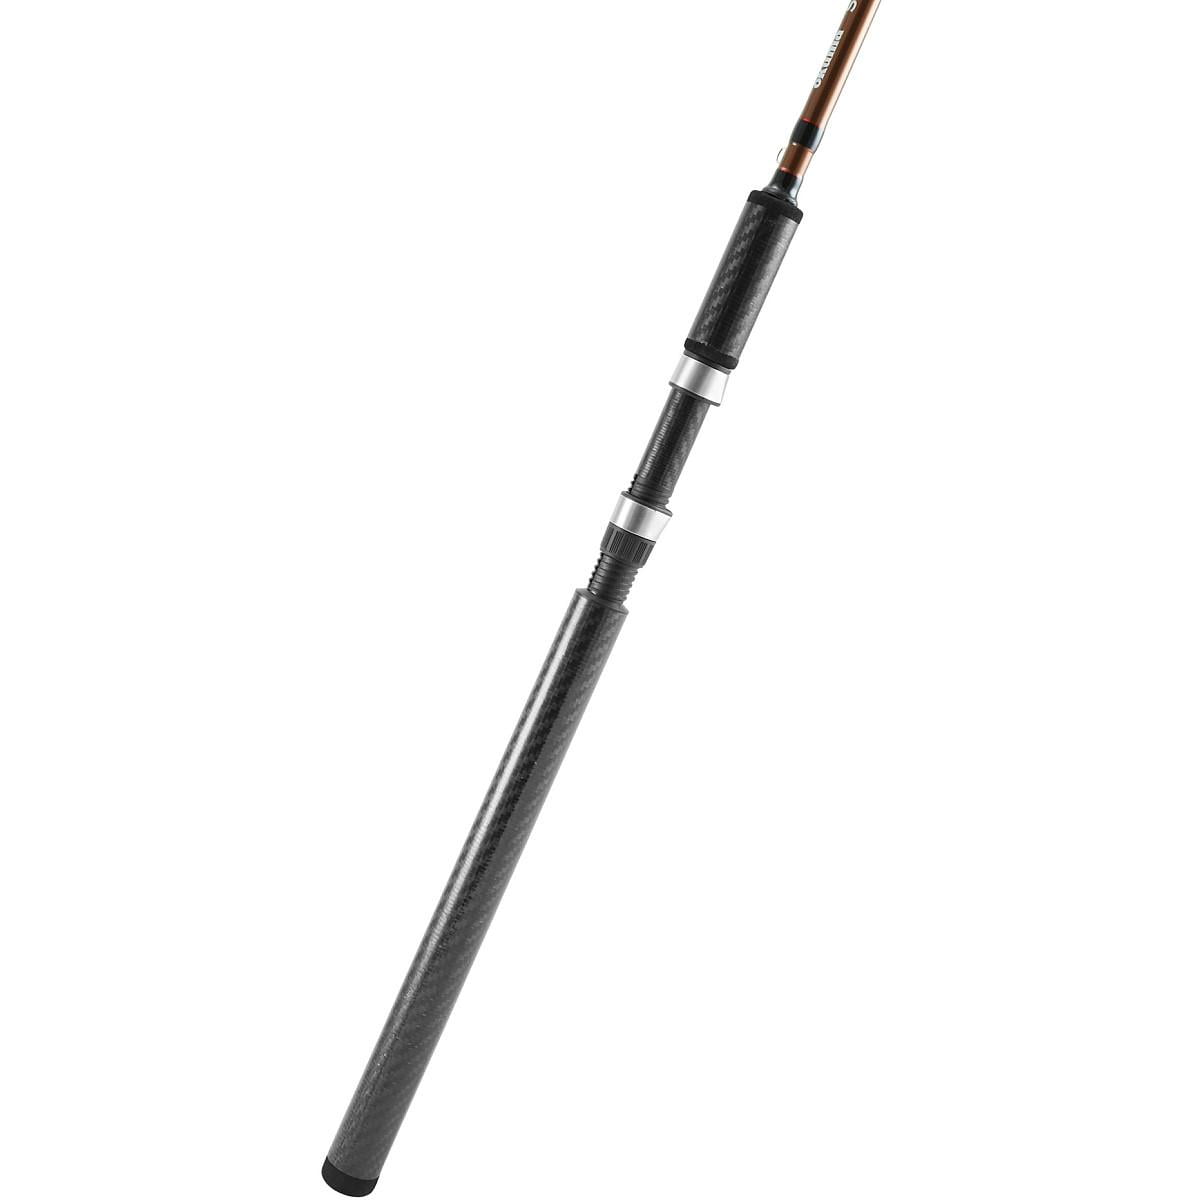 Okuma SST Spinning Rod with Carbon Fiber Grips 